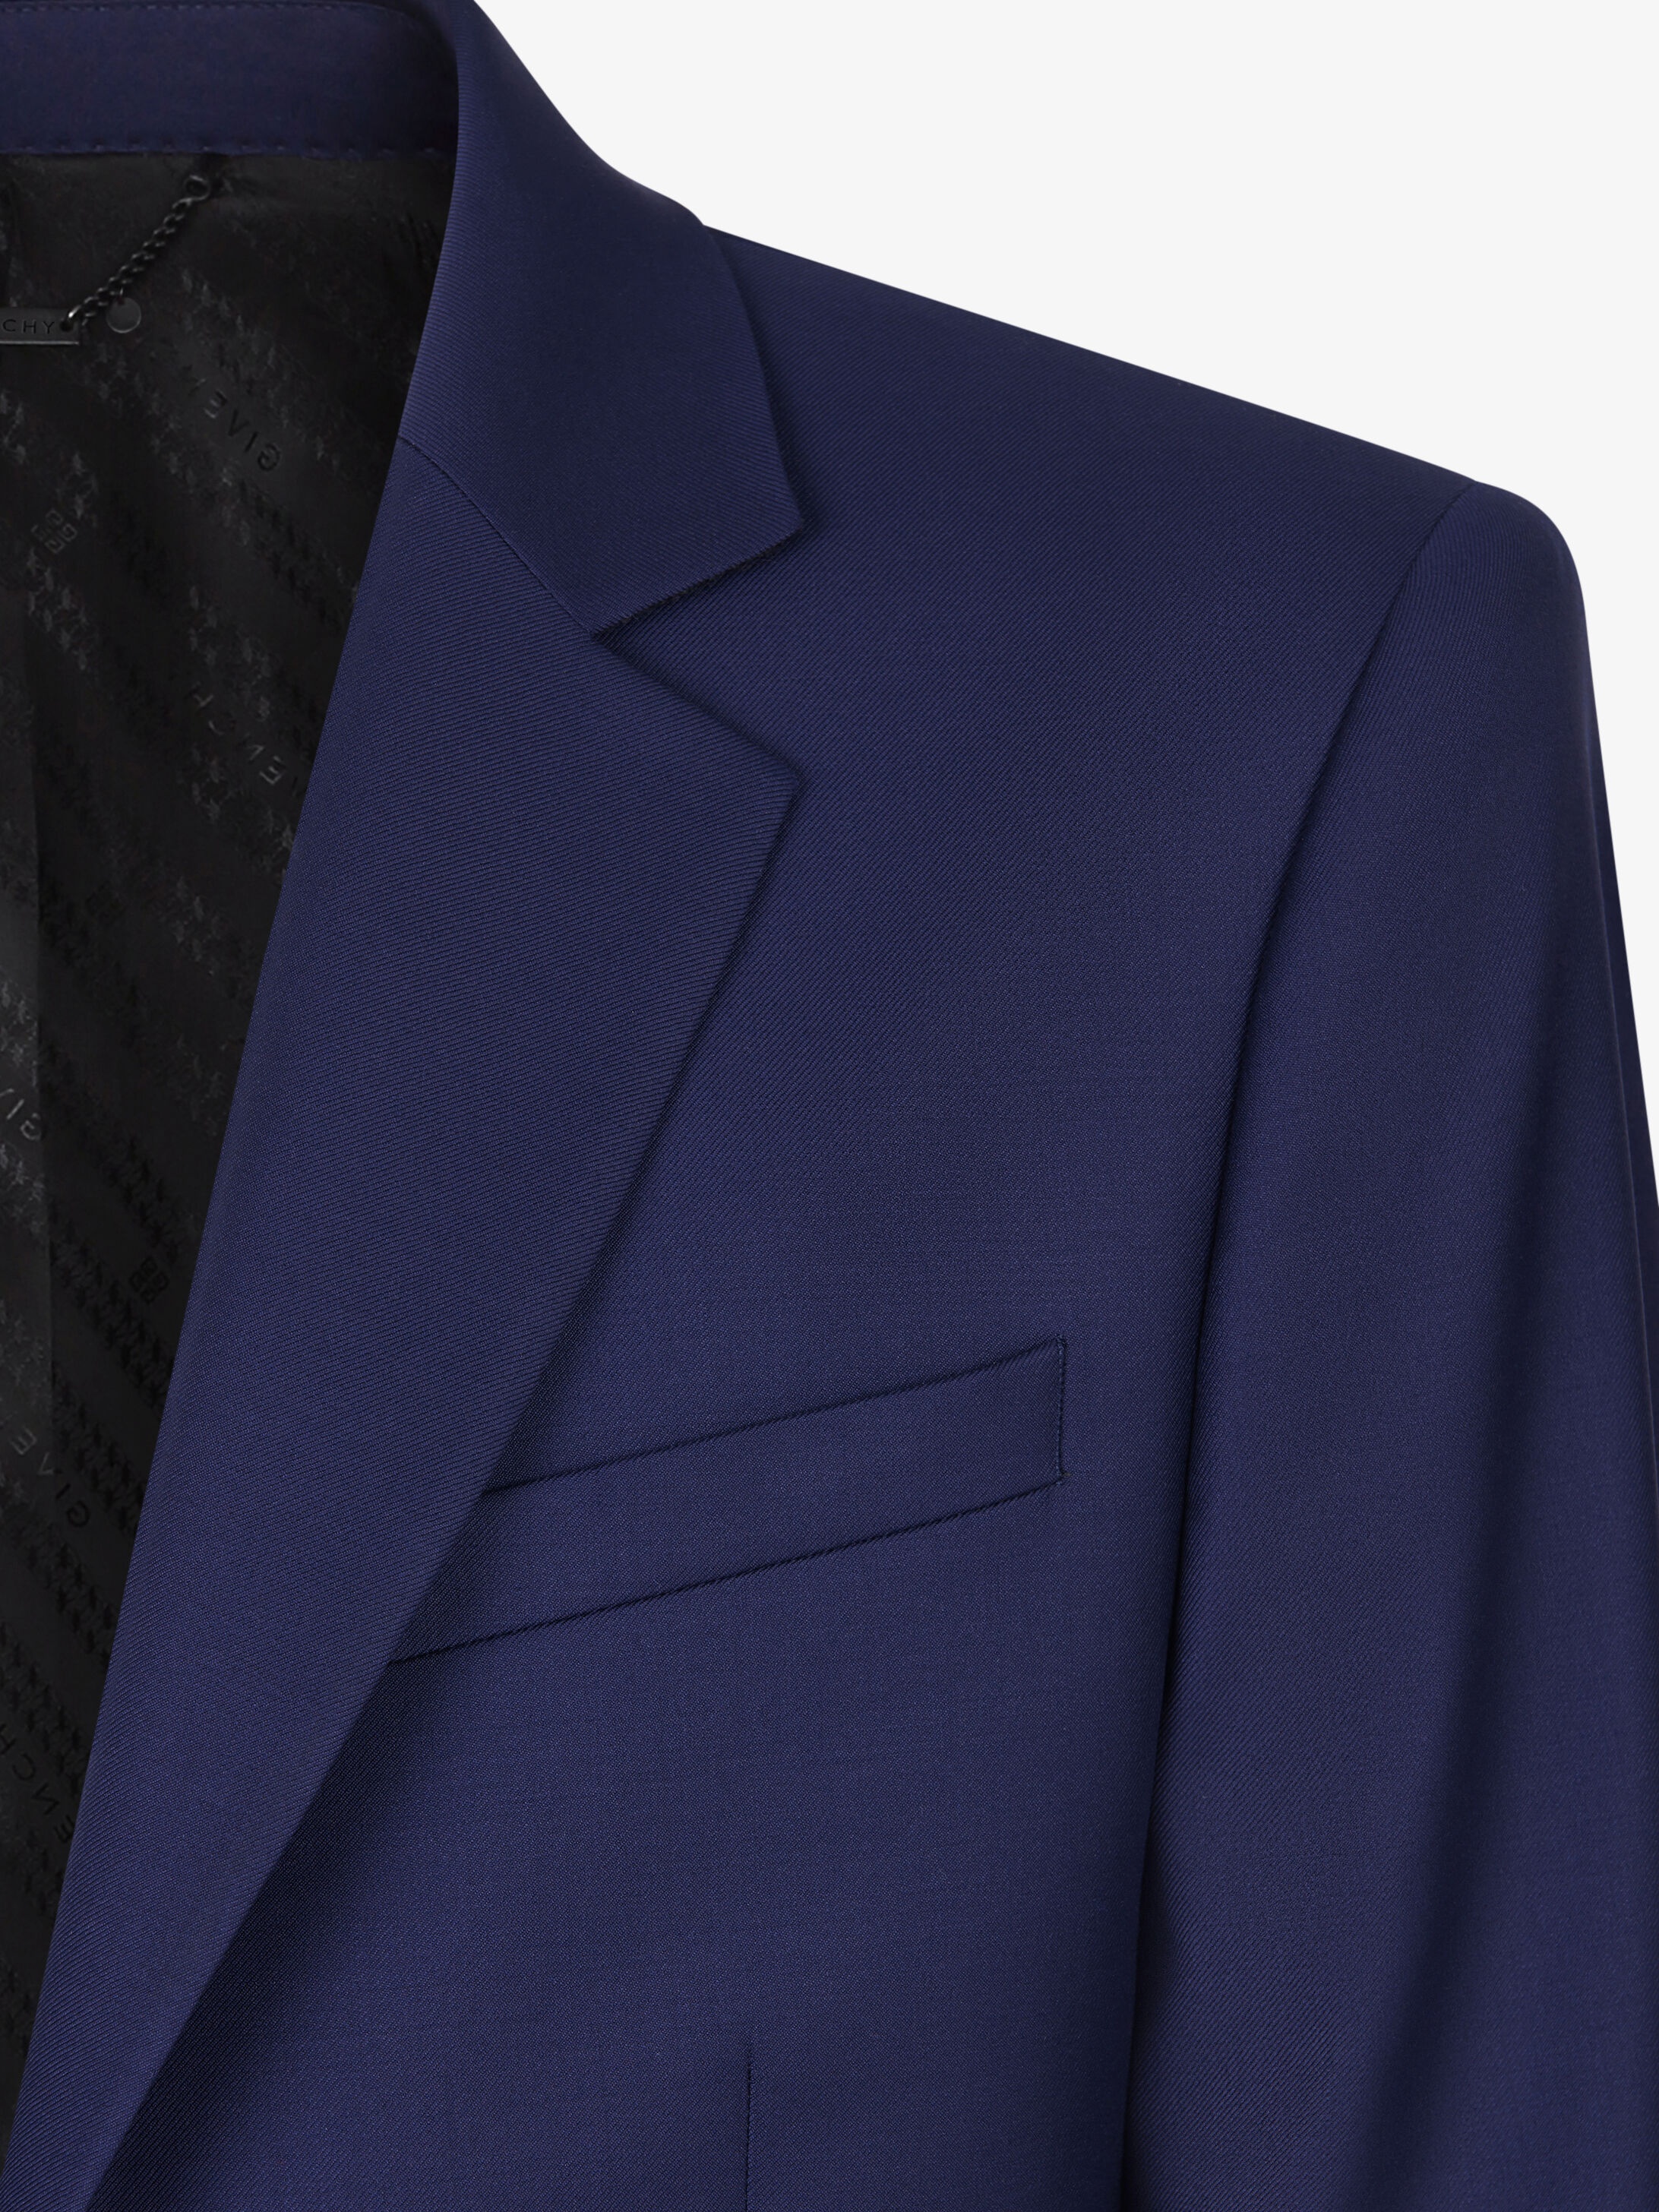 Slim fit suit in lightweight wool - 6